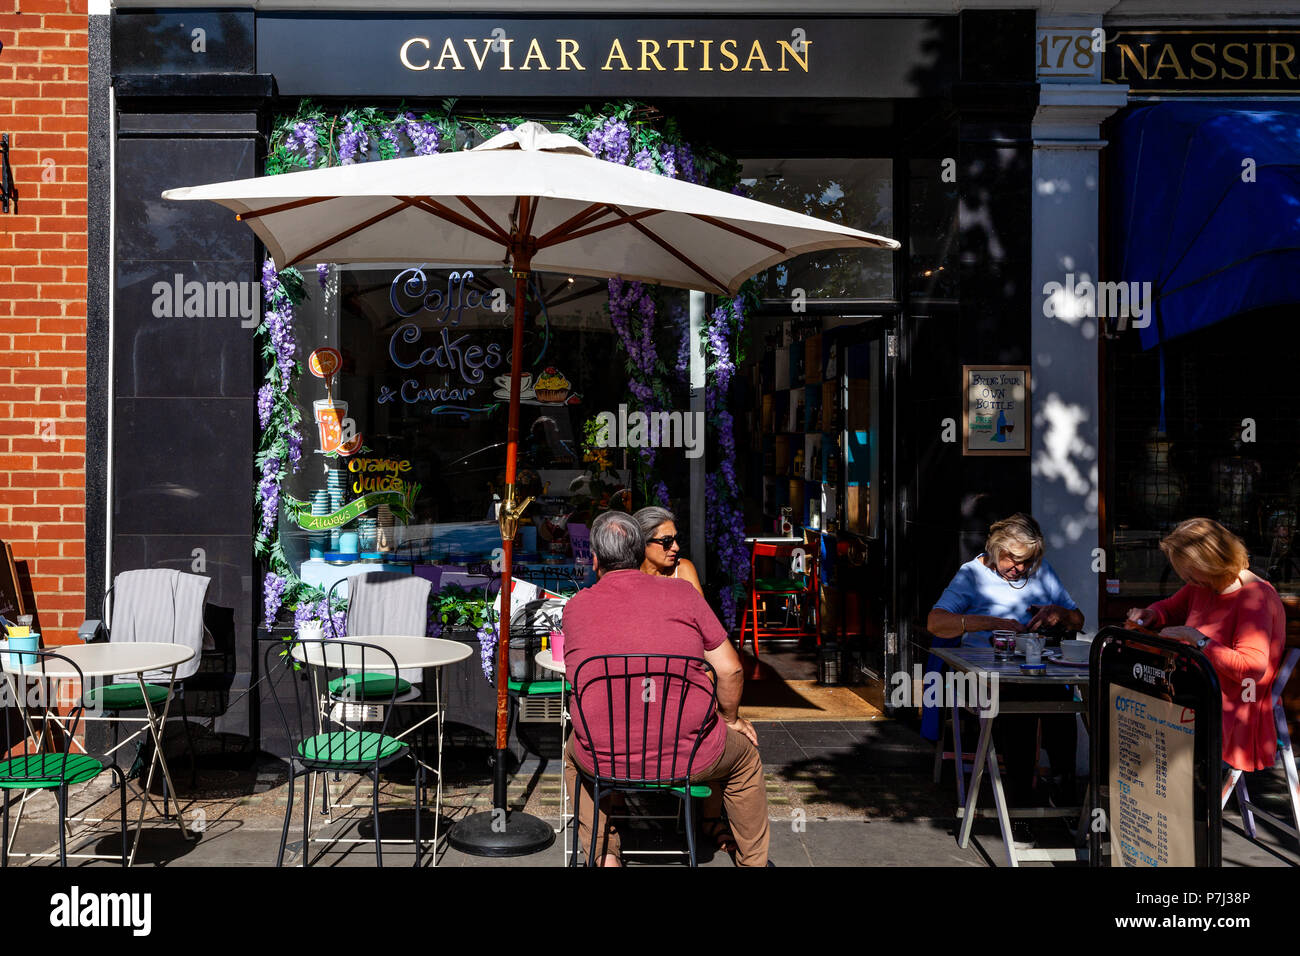 Caviar Artisan Cafe & Caviar Cellar, Notting Hill Gate, London, United Kingdom Stock Photo